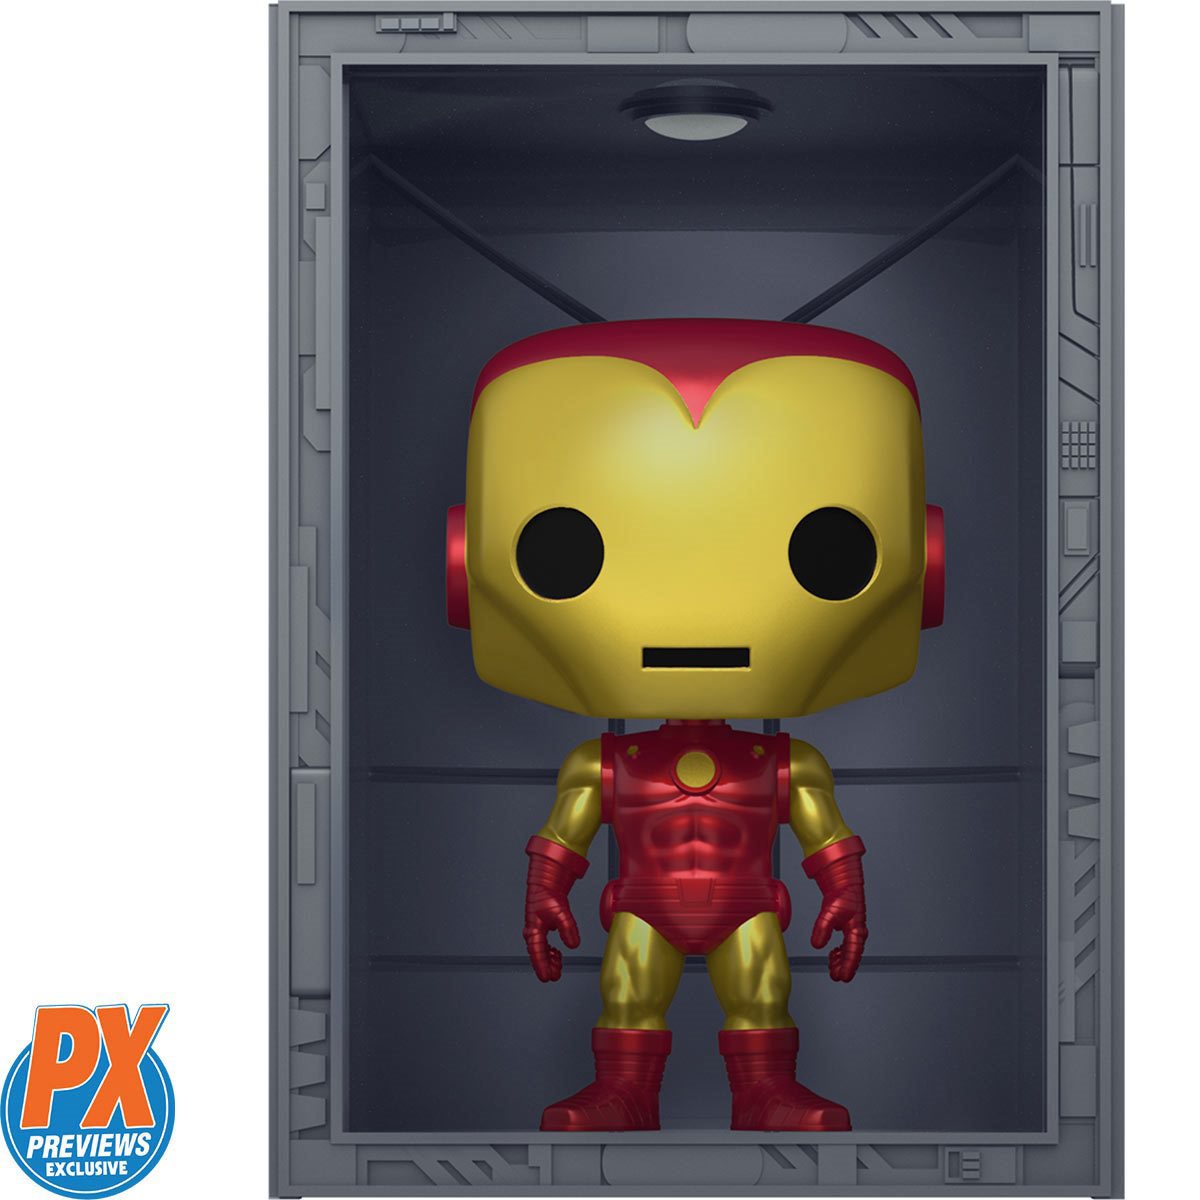 Iron Man #1282 Funko Pop! Marvel Holiday